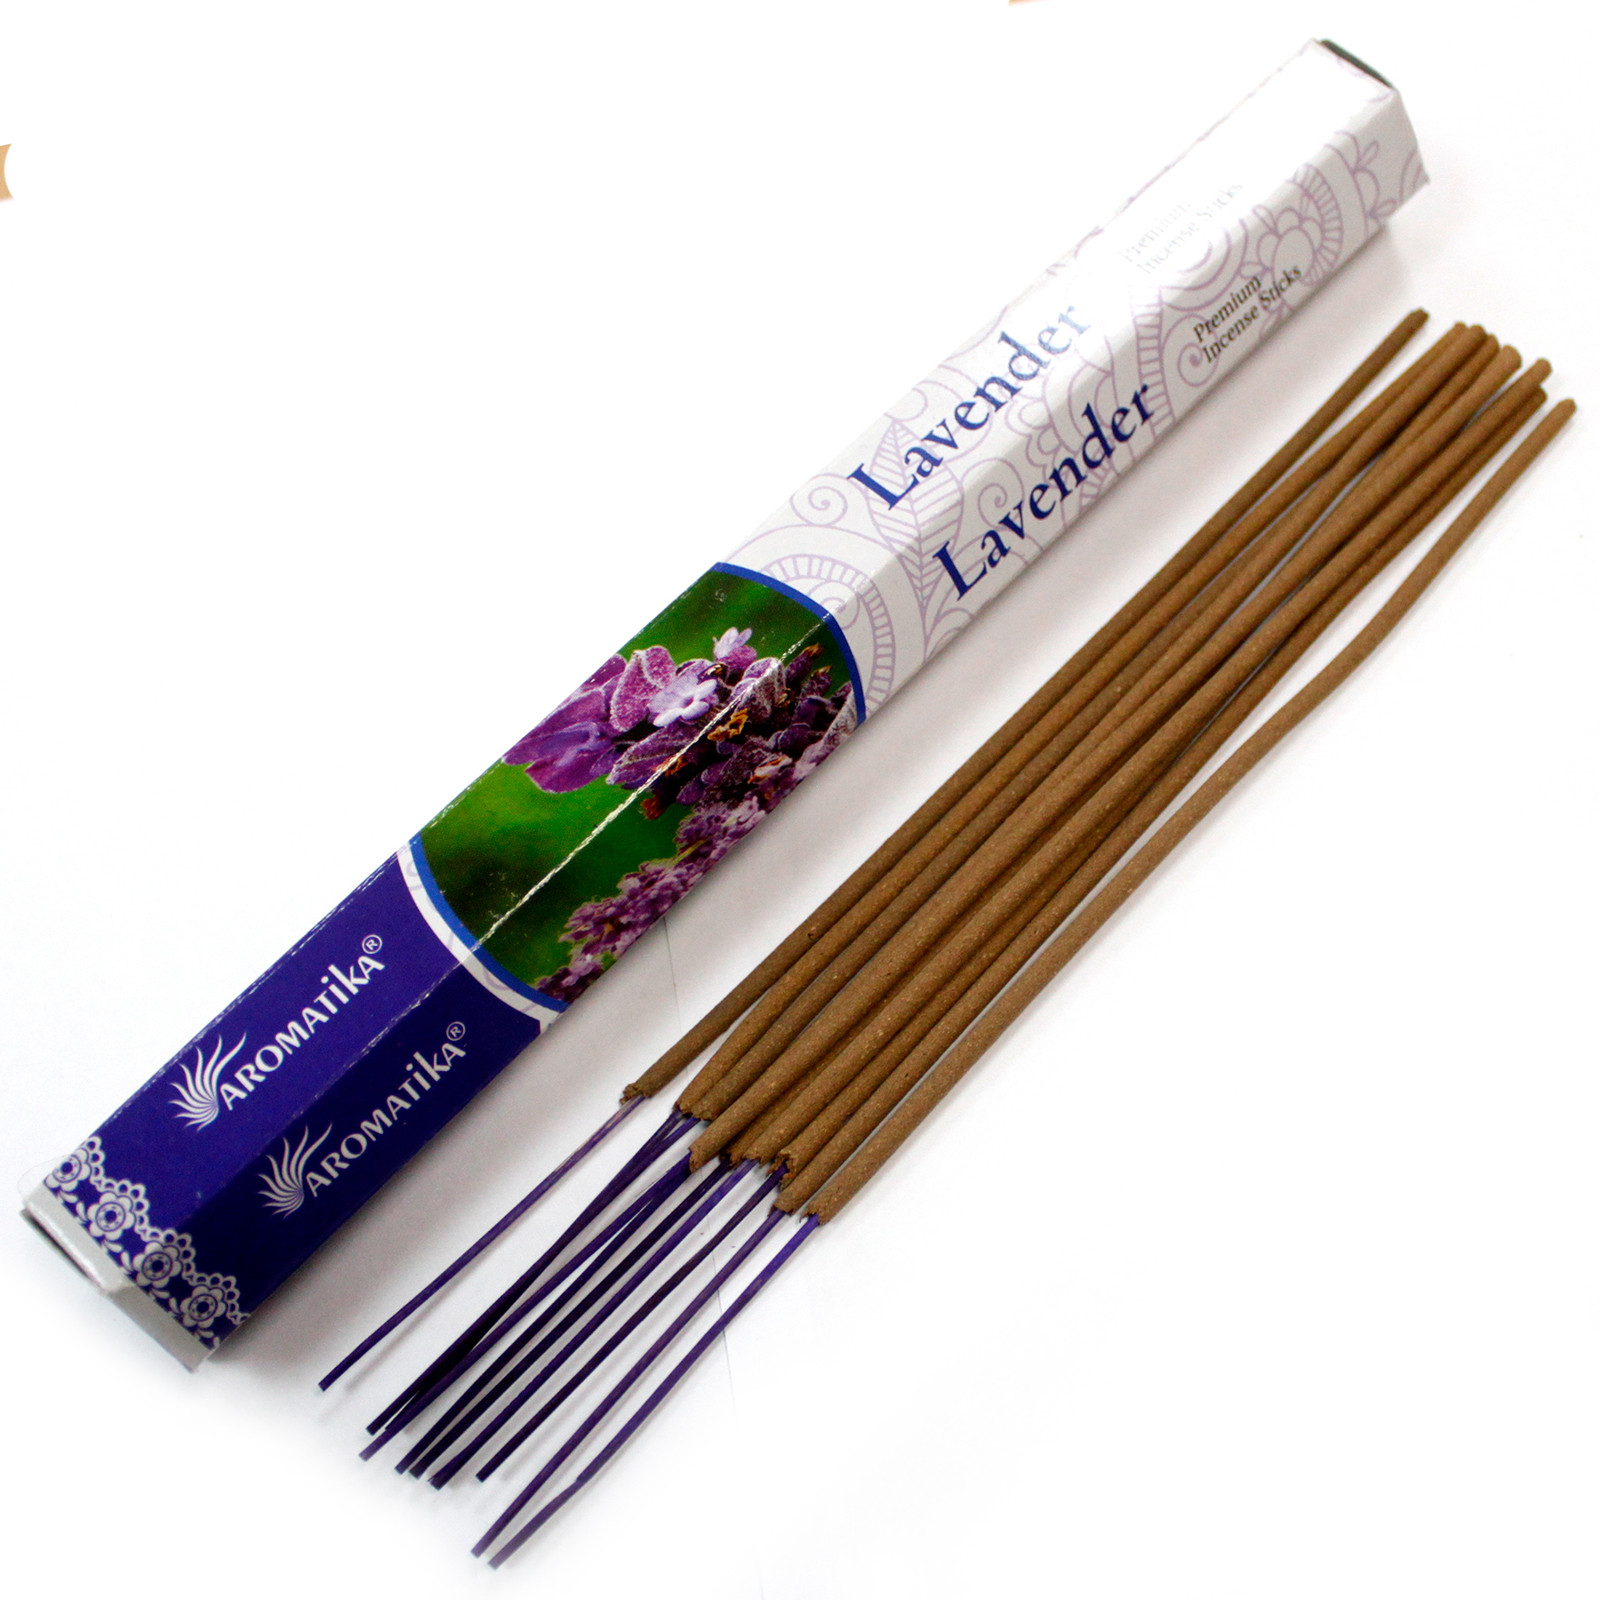 Aromatika LAVENDER Incense Sticks (ЛАВАНДА ароматические палочки, Ароматика), шестигранник, 20 г.